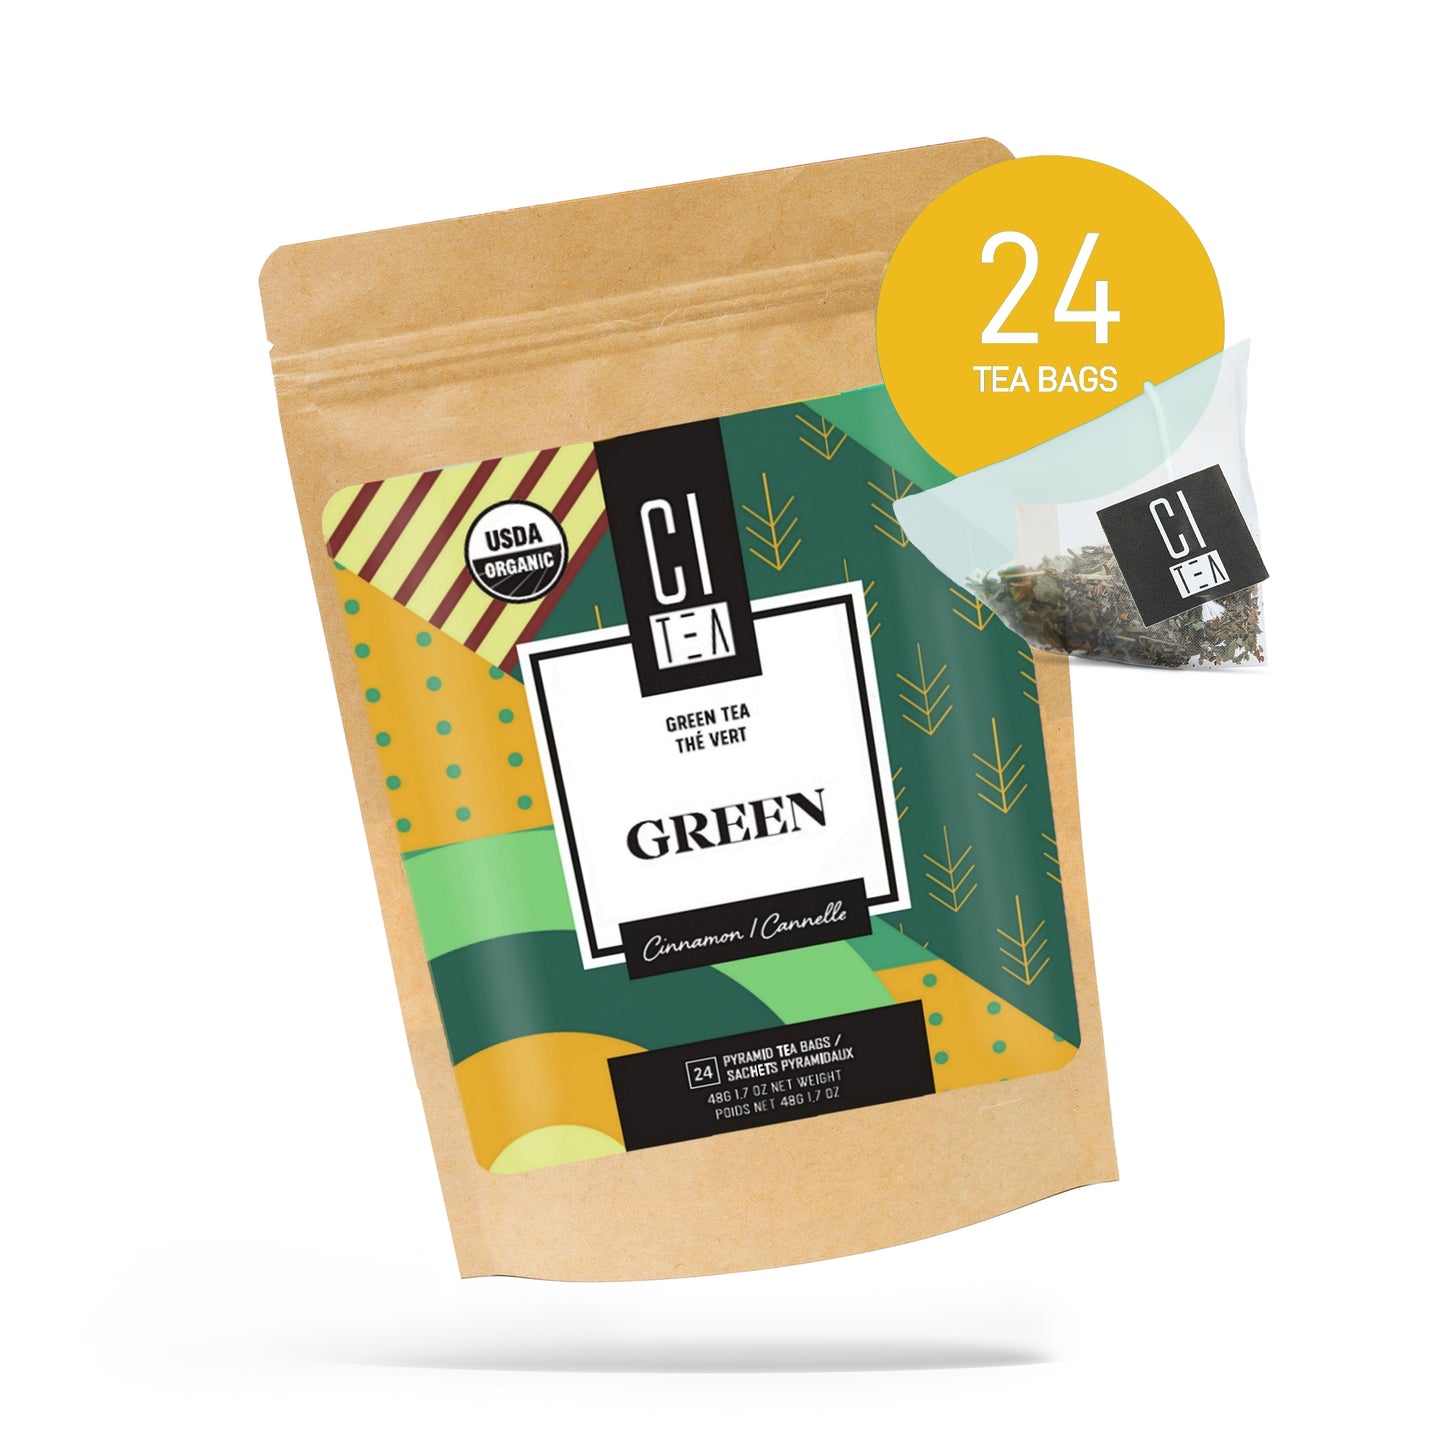 Organic Green tea with Cinnamon - 24 teabags